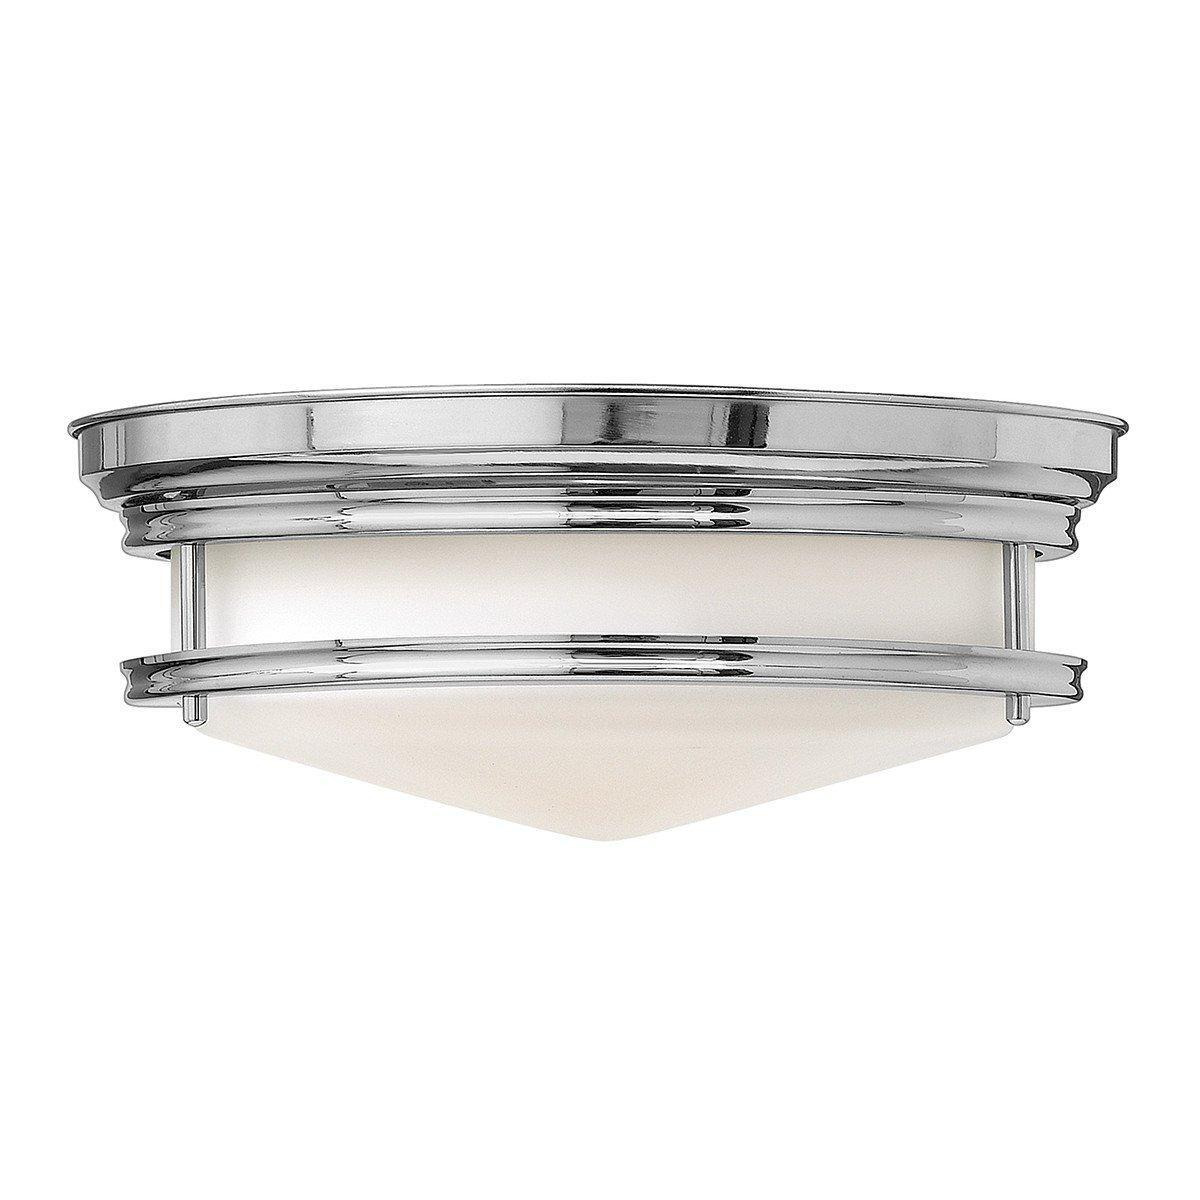 Hadley 3 Light Semi Flush Ceiling Light Chrome E27 - image 1